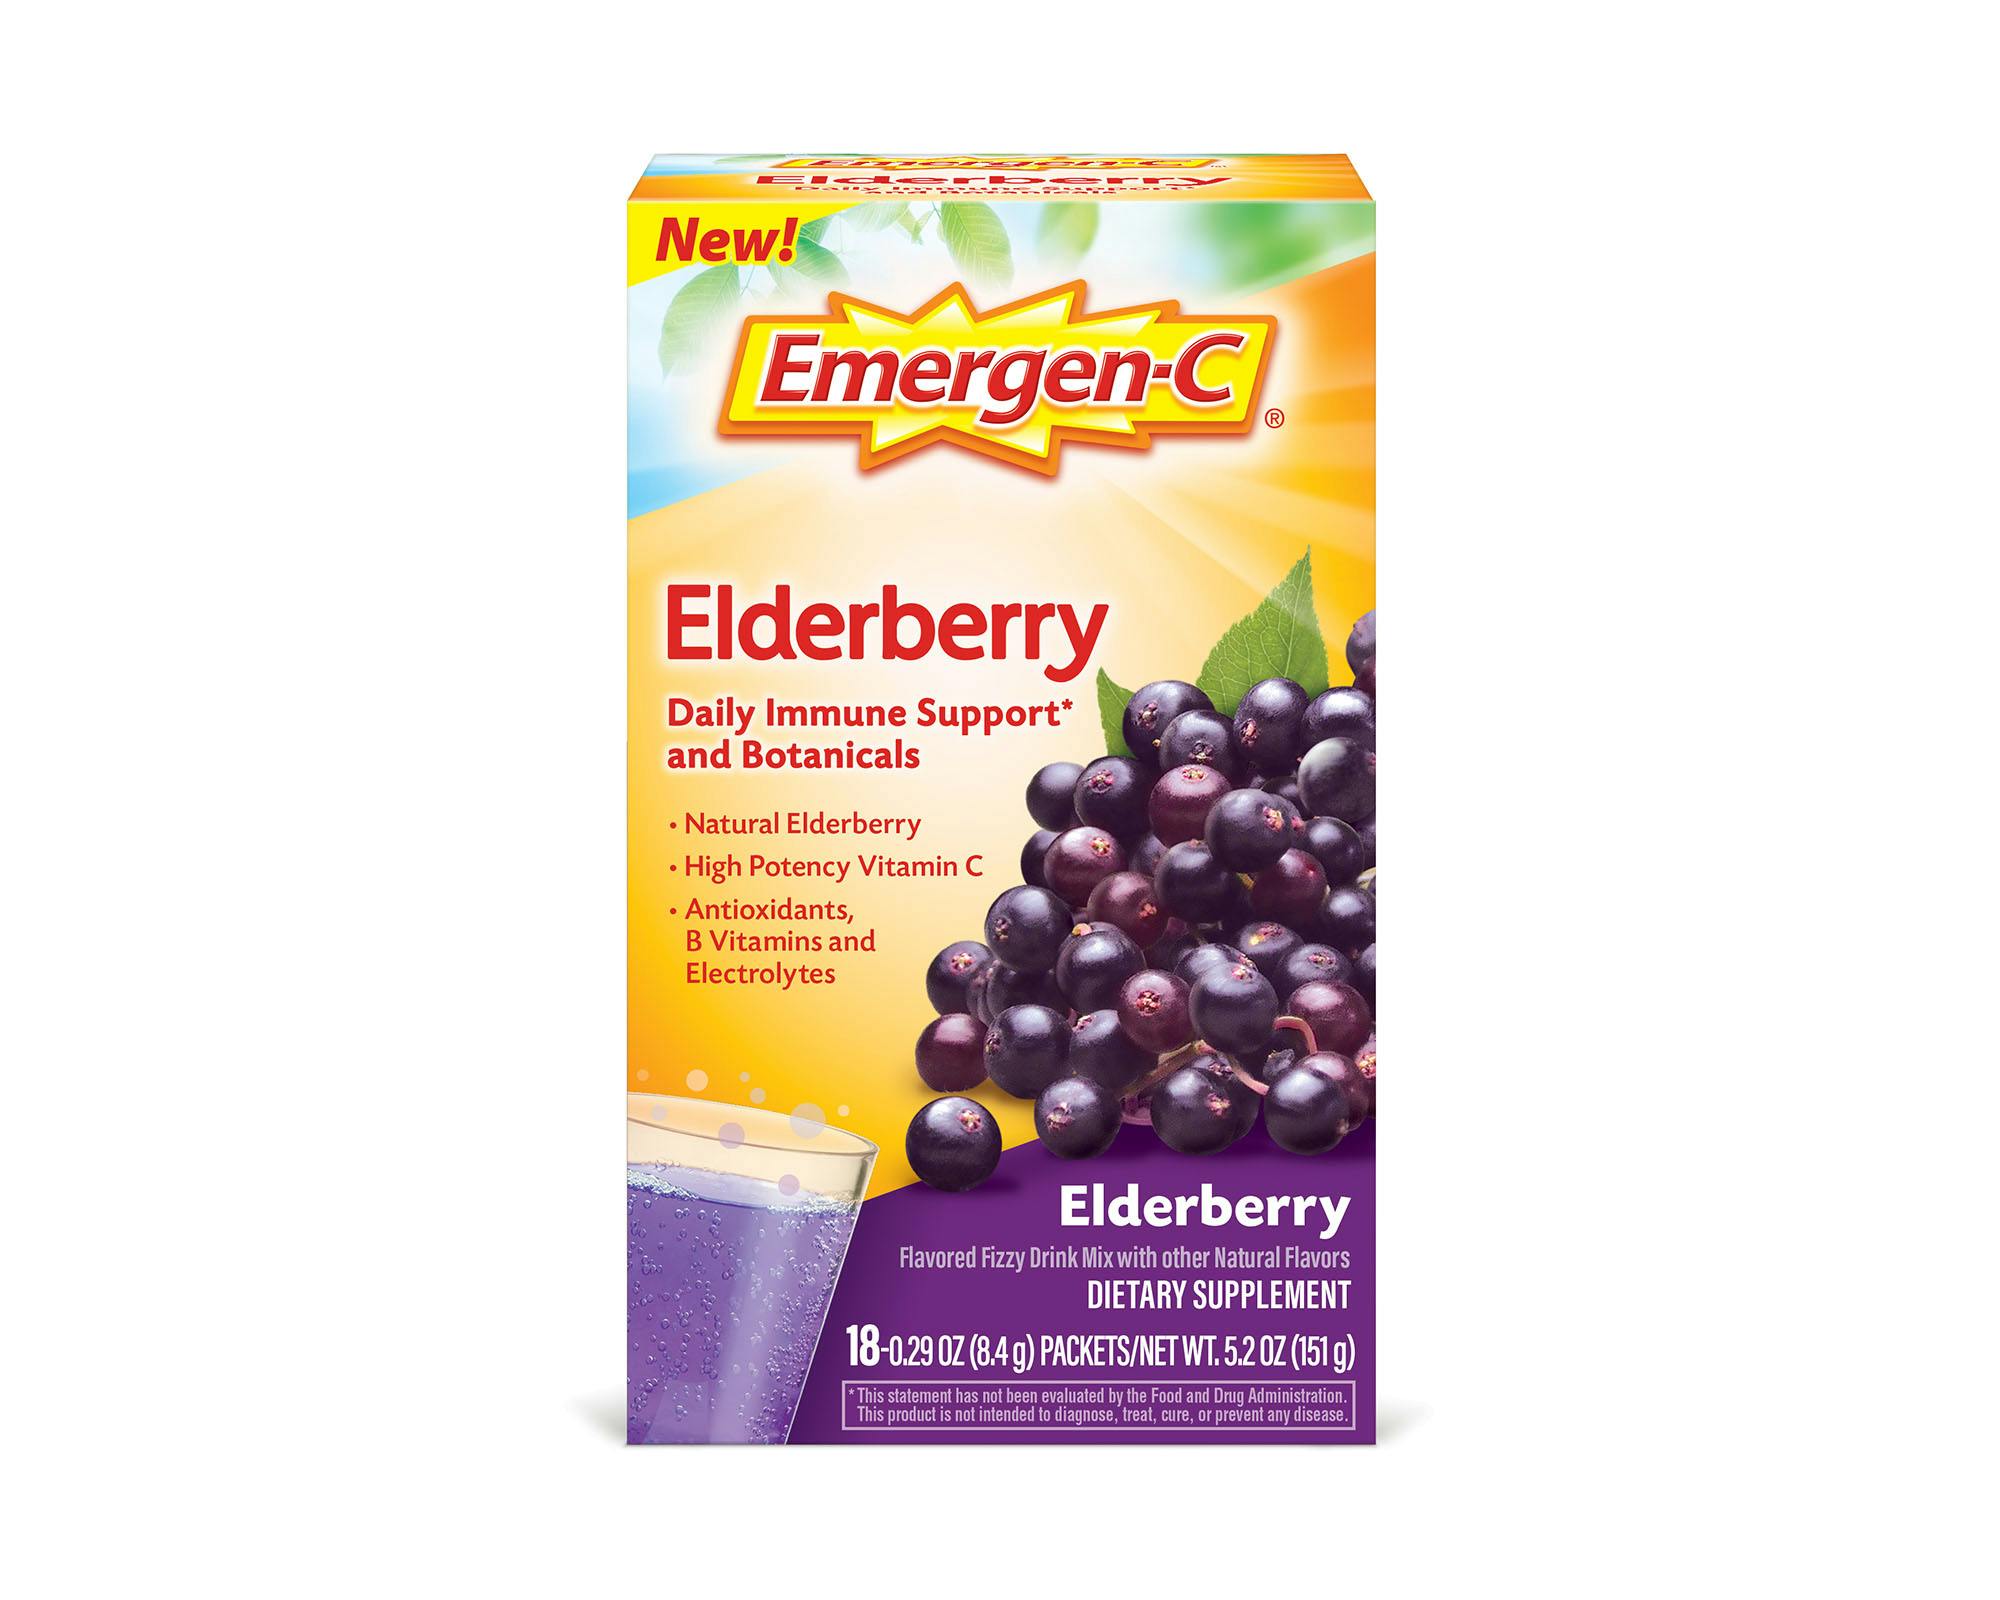 Elderberry Botanicals Immune Support box